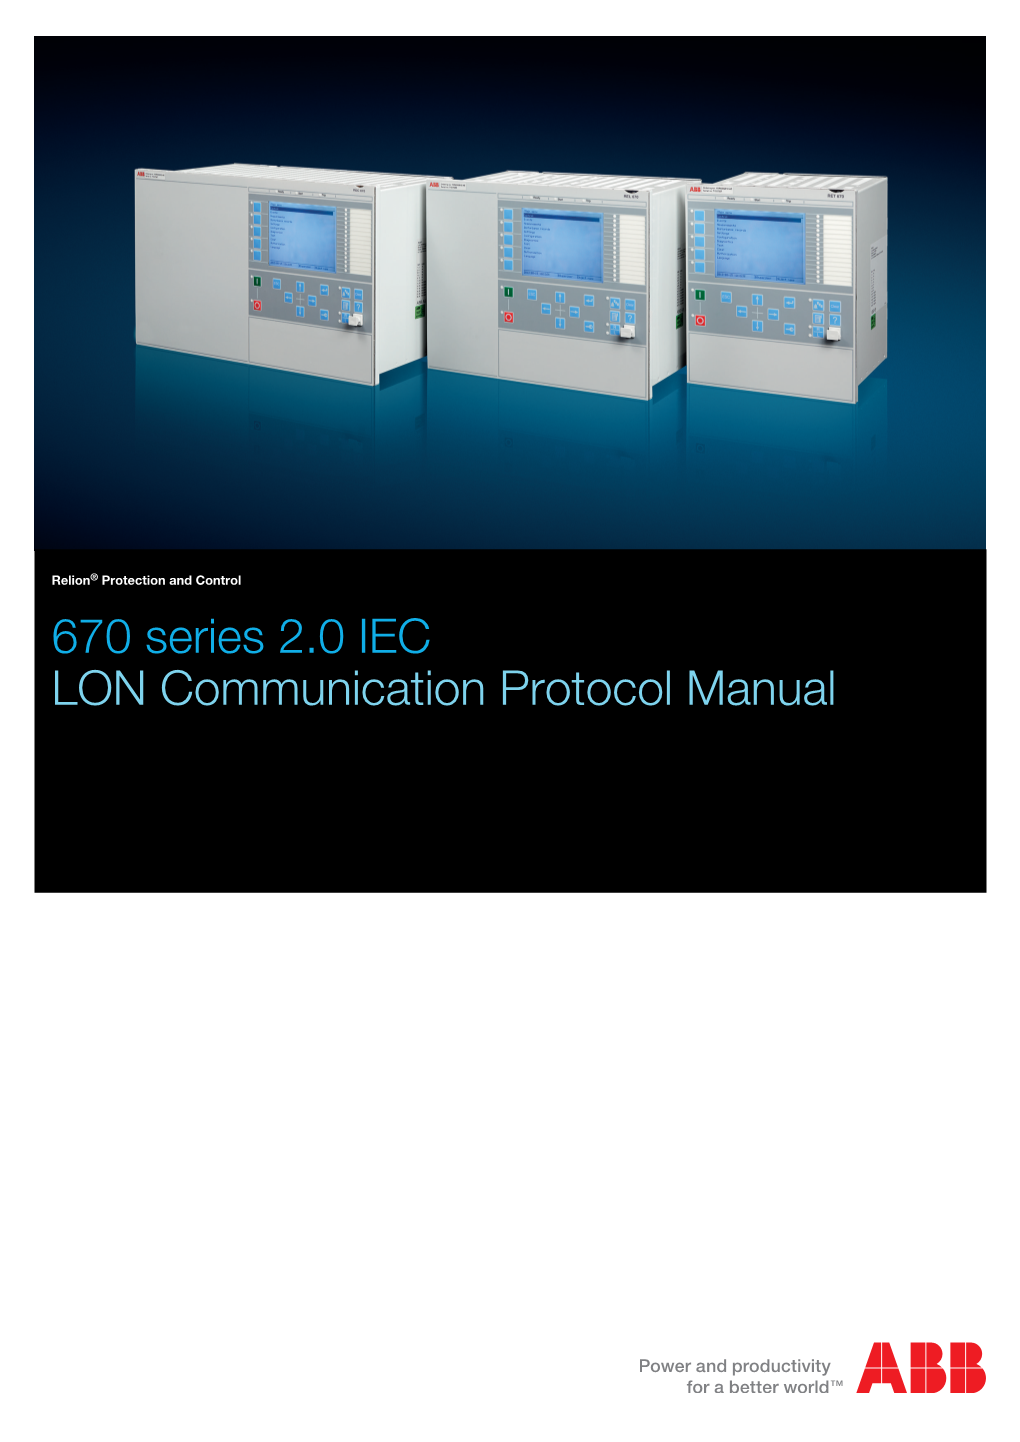 LON Communication Protocol Manual